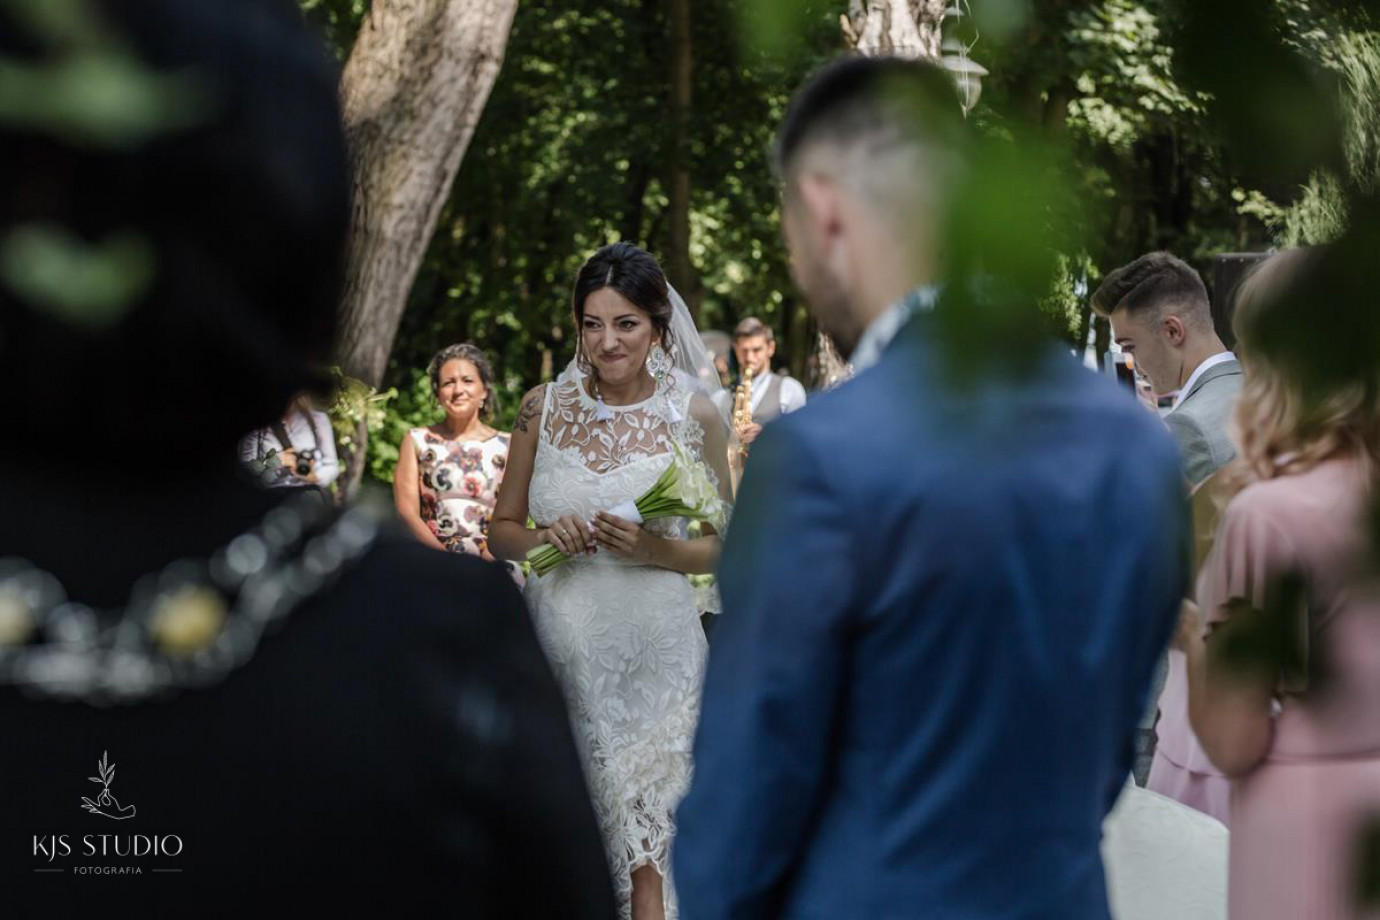 zdjęcia gdansk fotograf kjs-fotografia portfolio zdjecia slubne inspiracje wesele plener slubny sesja slubna